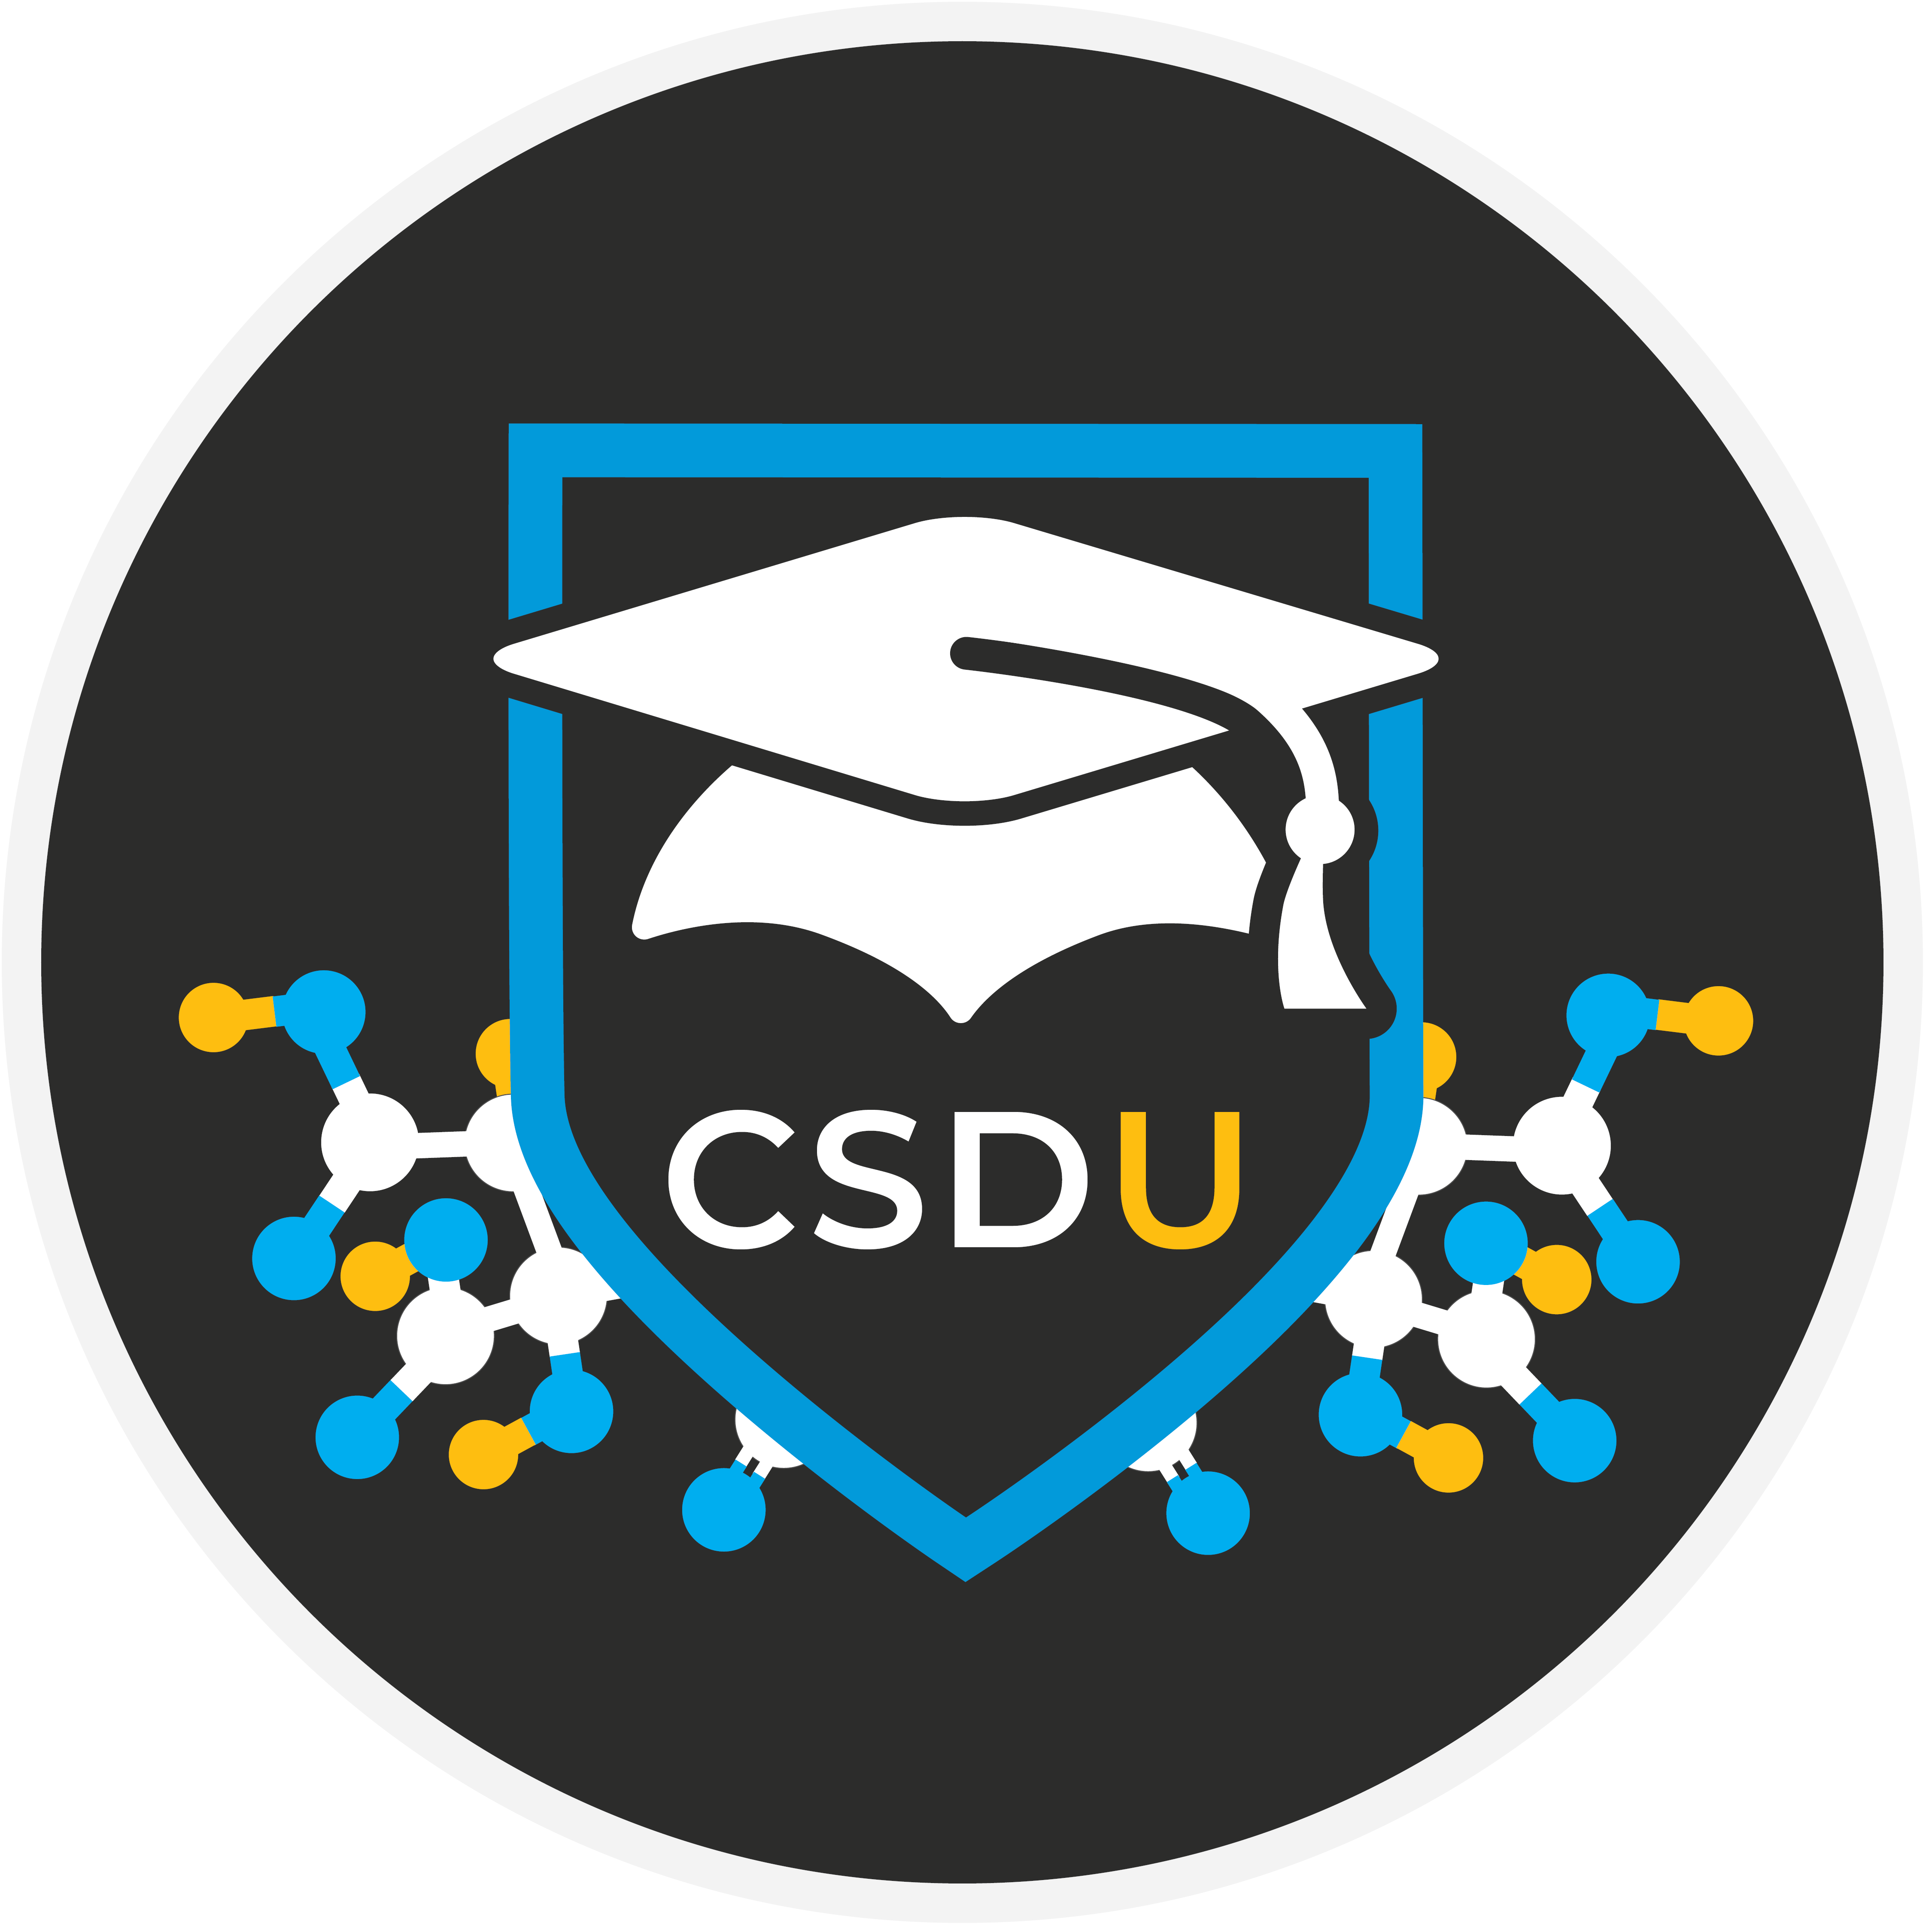 CSDU logo, showing a mortar board with CSDU beneath the board